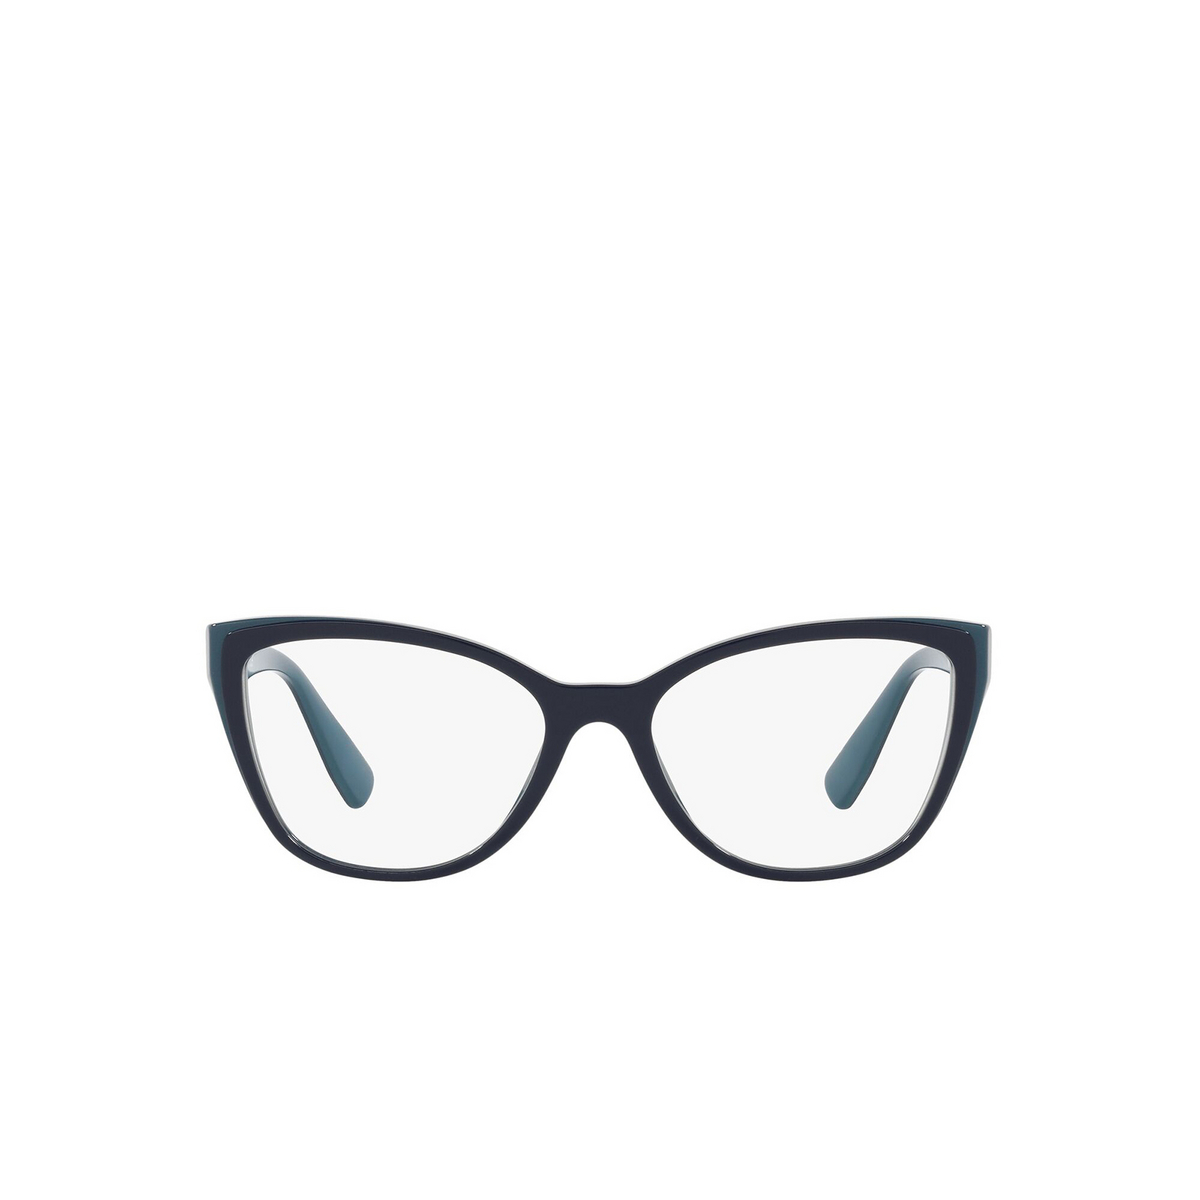 Miu Miu® Cat-eye Eyeglasses: Core Collection MU 04SV color Blue TMY1O1 - front view.